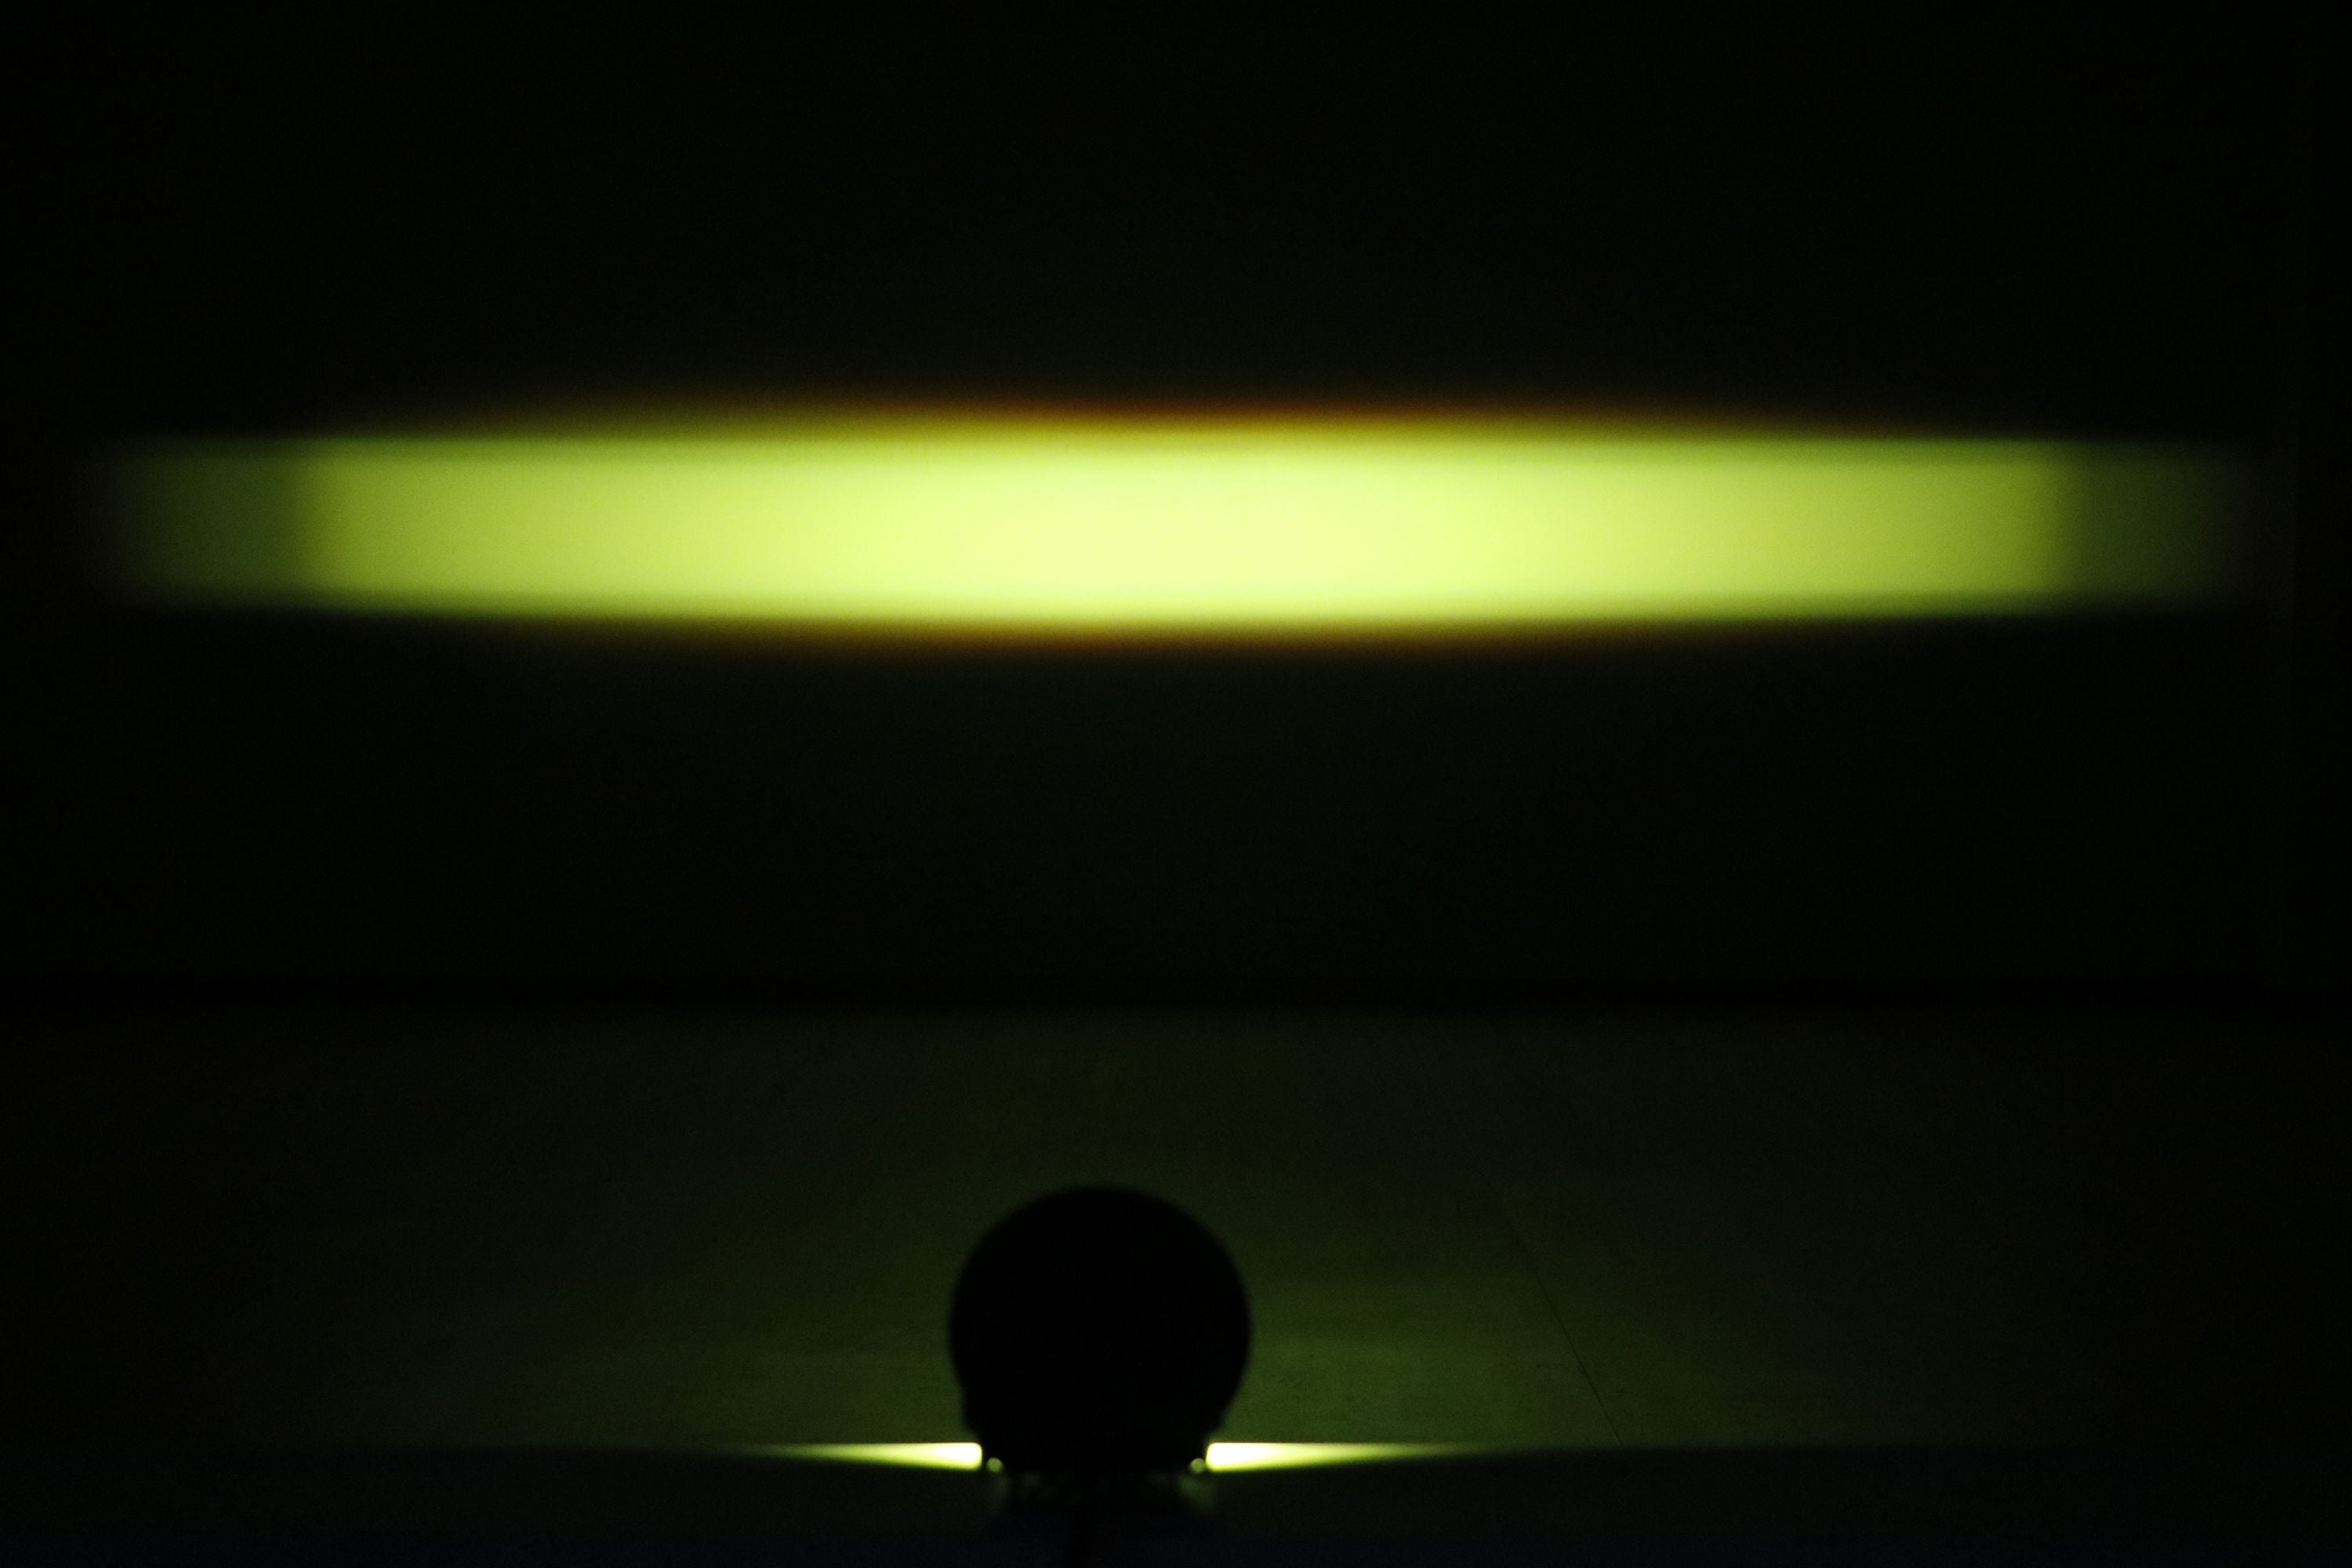 RTXOA5G3621 - 3" Cube Pod Light, Round, Fog Light, Yellow 620Lm